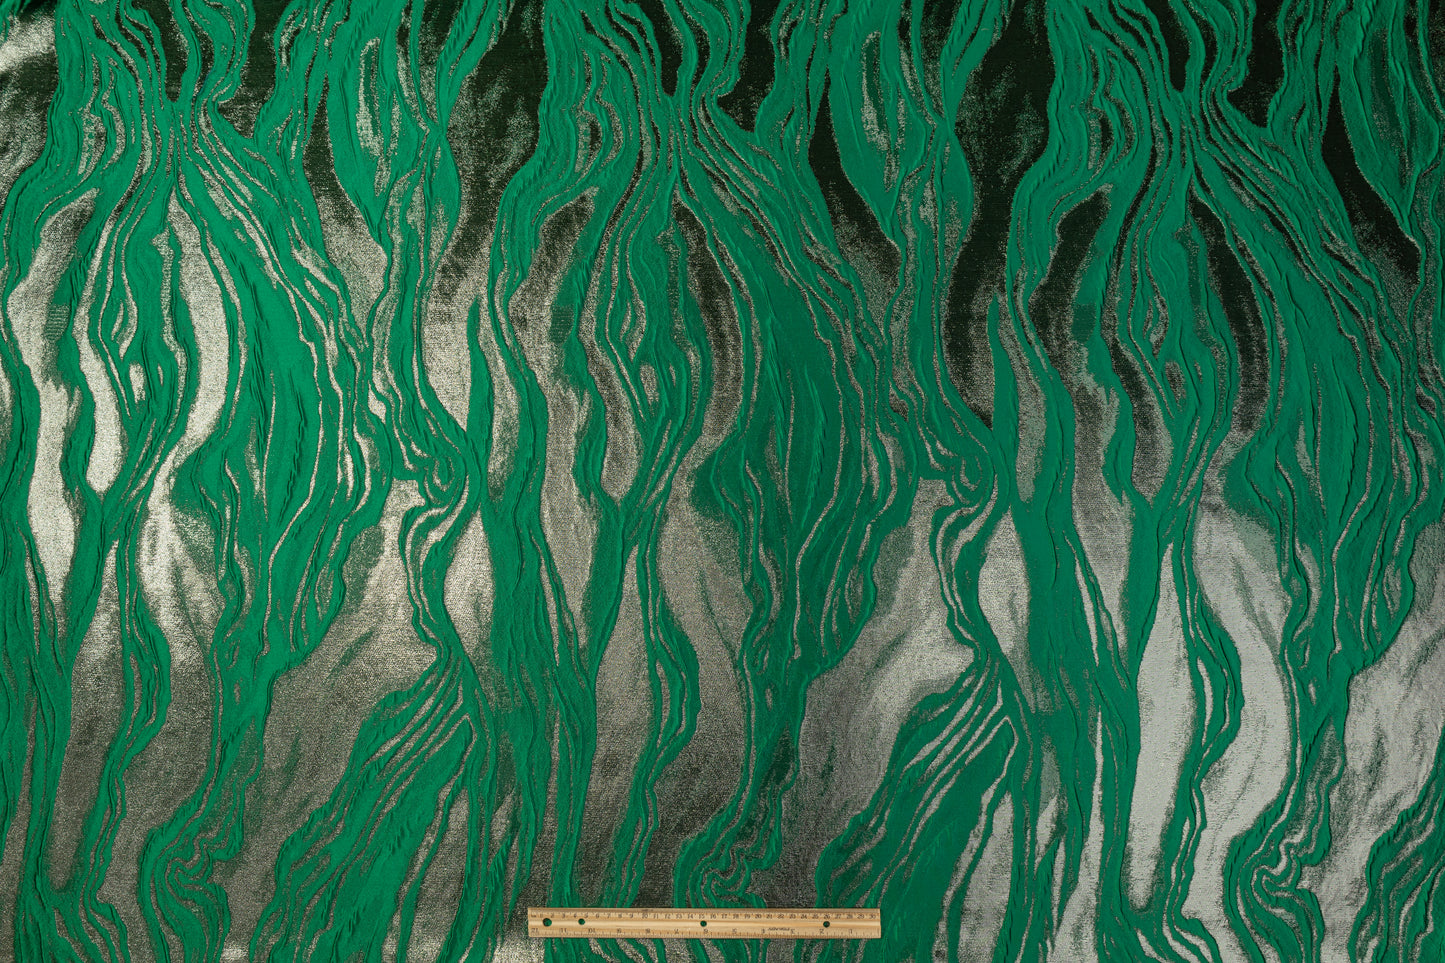 Abstract Metallic Italian Cloqué Brocade - Green